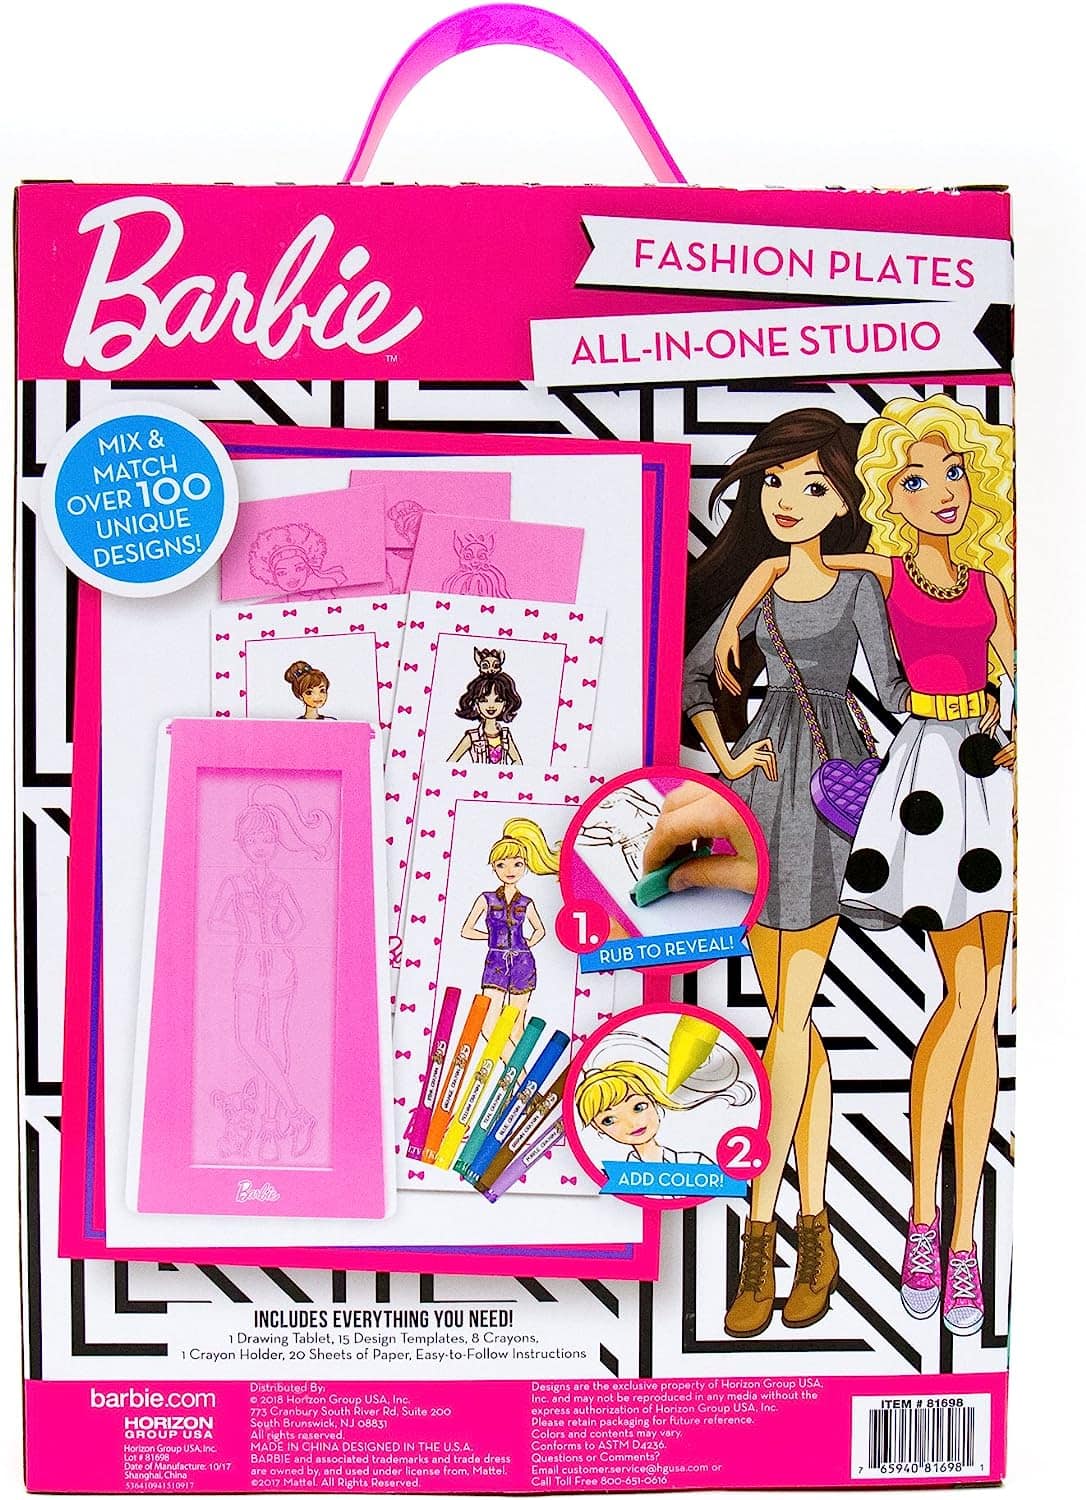 Barbie fashion plates activity